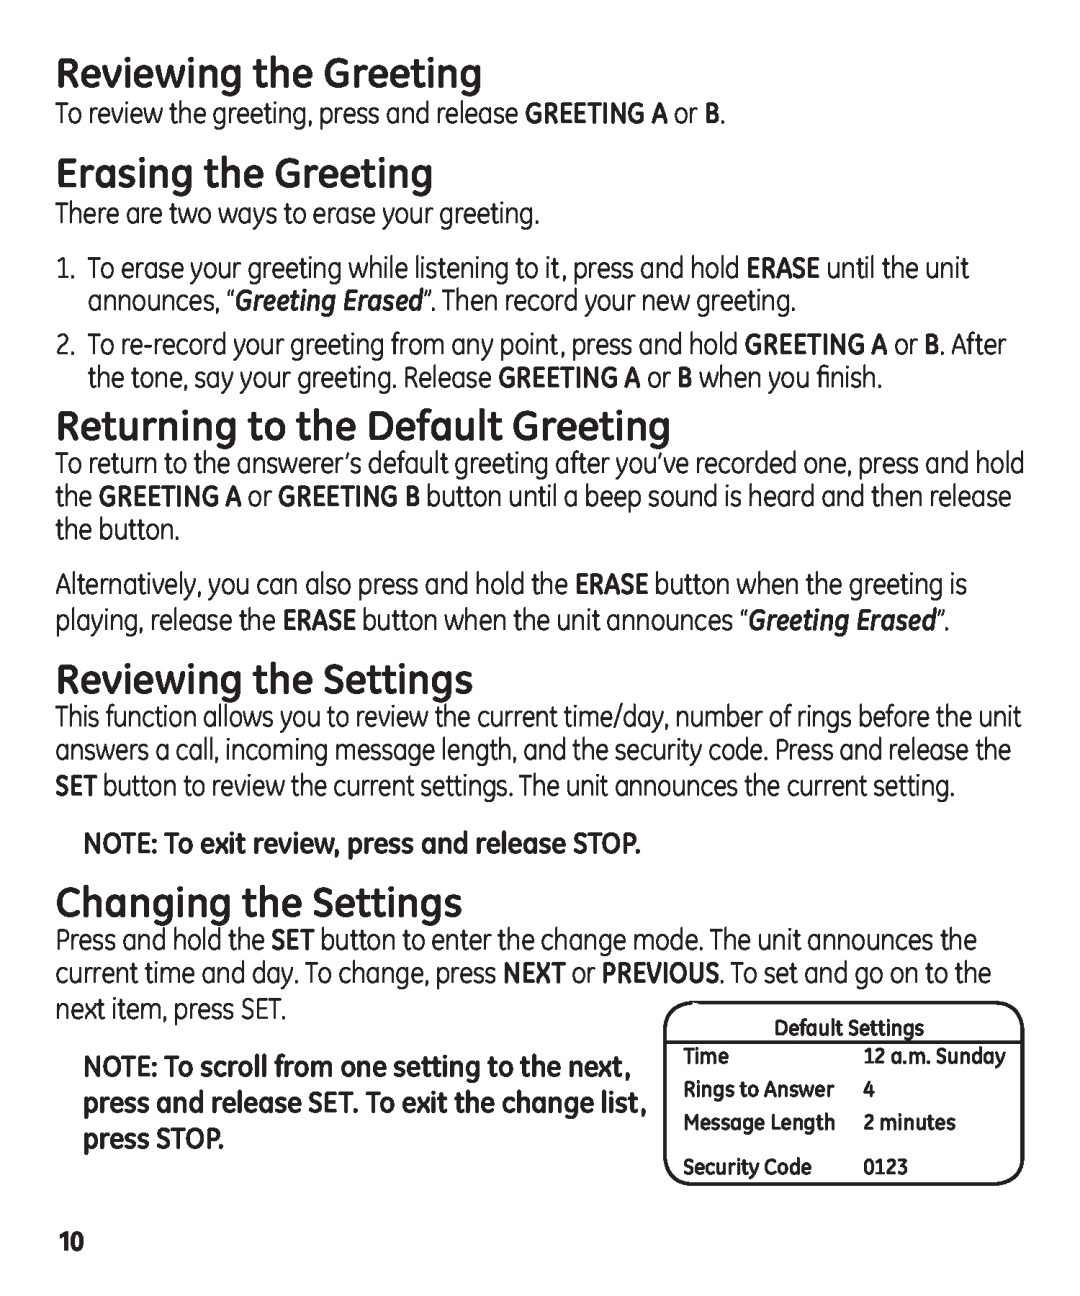 GE 29861 manual Reviewing the Greeting, Erasing the Greeting, Returning to the Default Greeting, Reviewing the Settings 